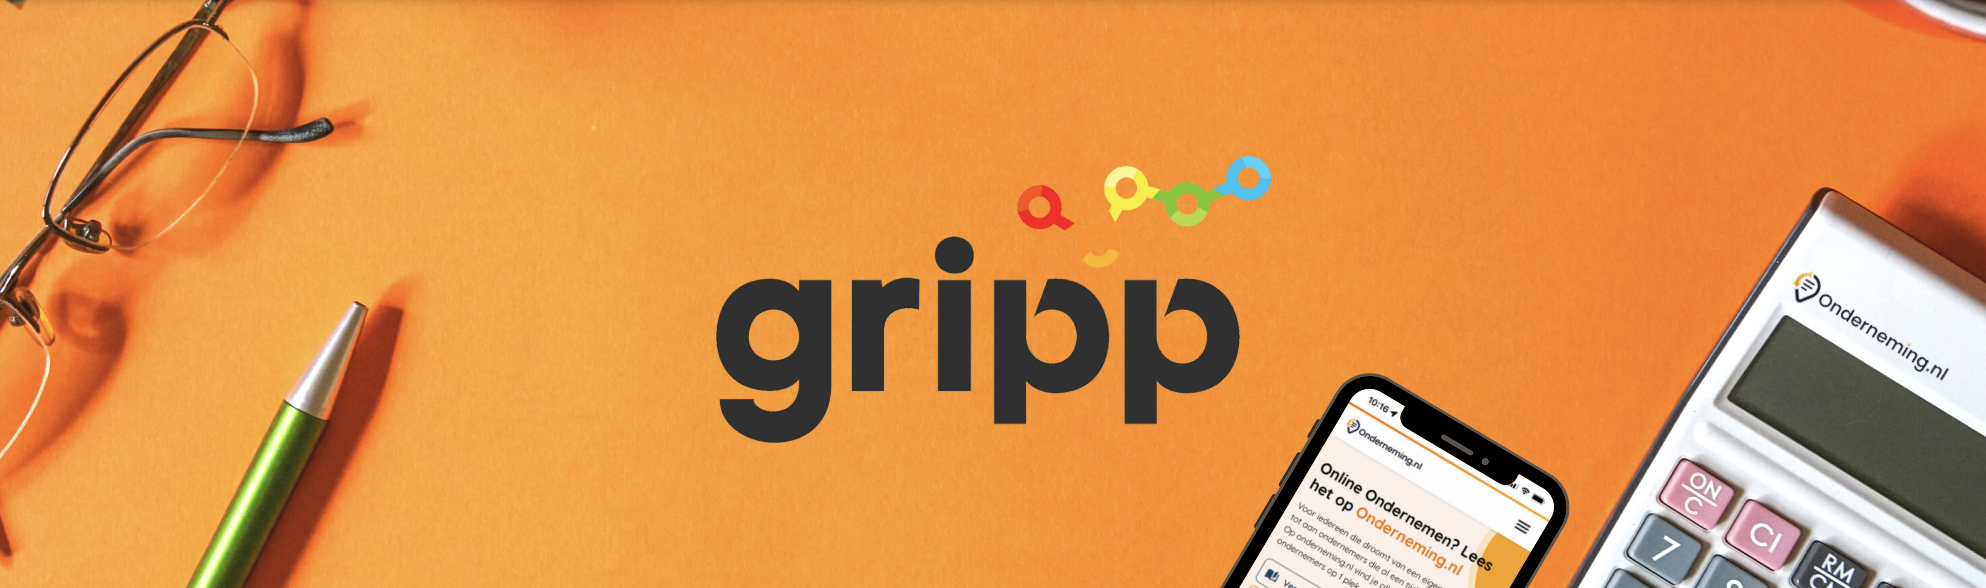 gripp header